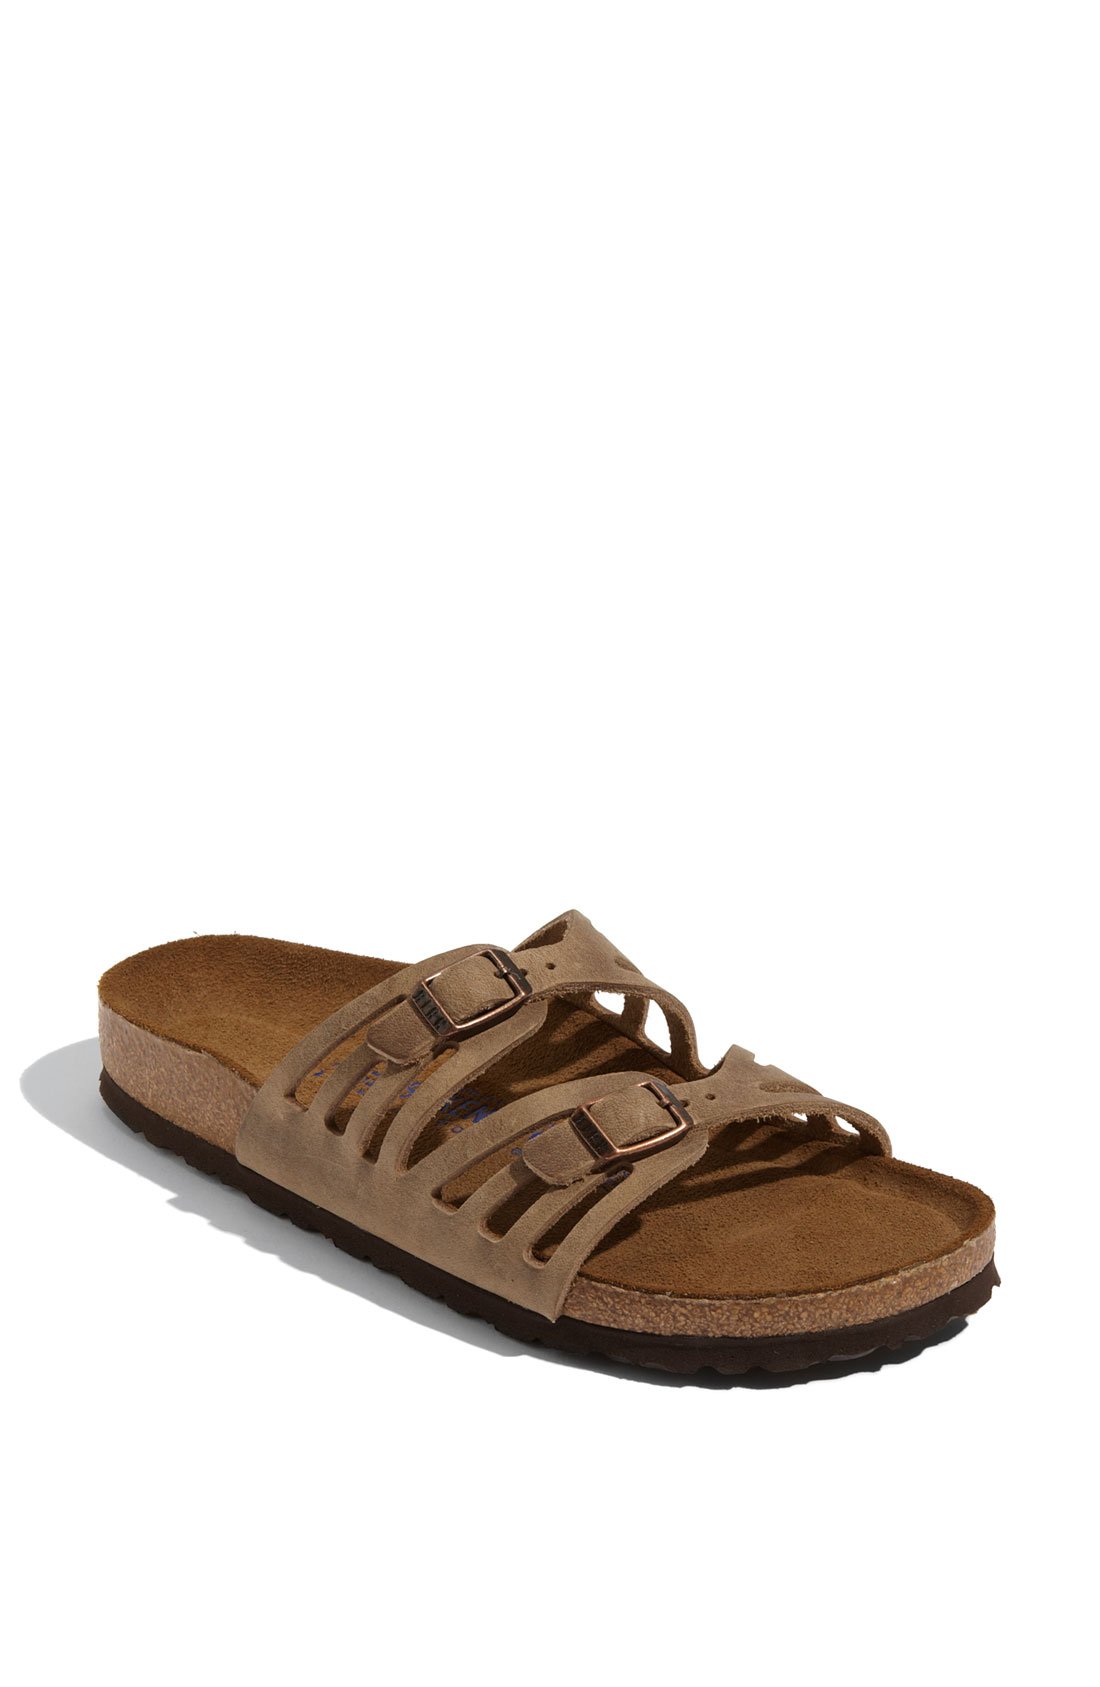 Birkenstock 'Granada' Soft Footbed Oiled Leather Sandal in Brown ...